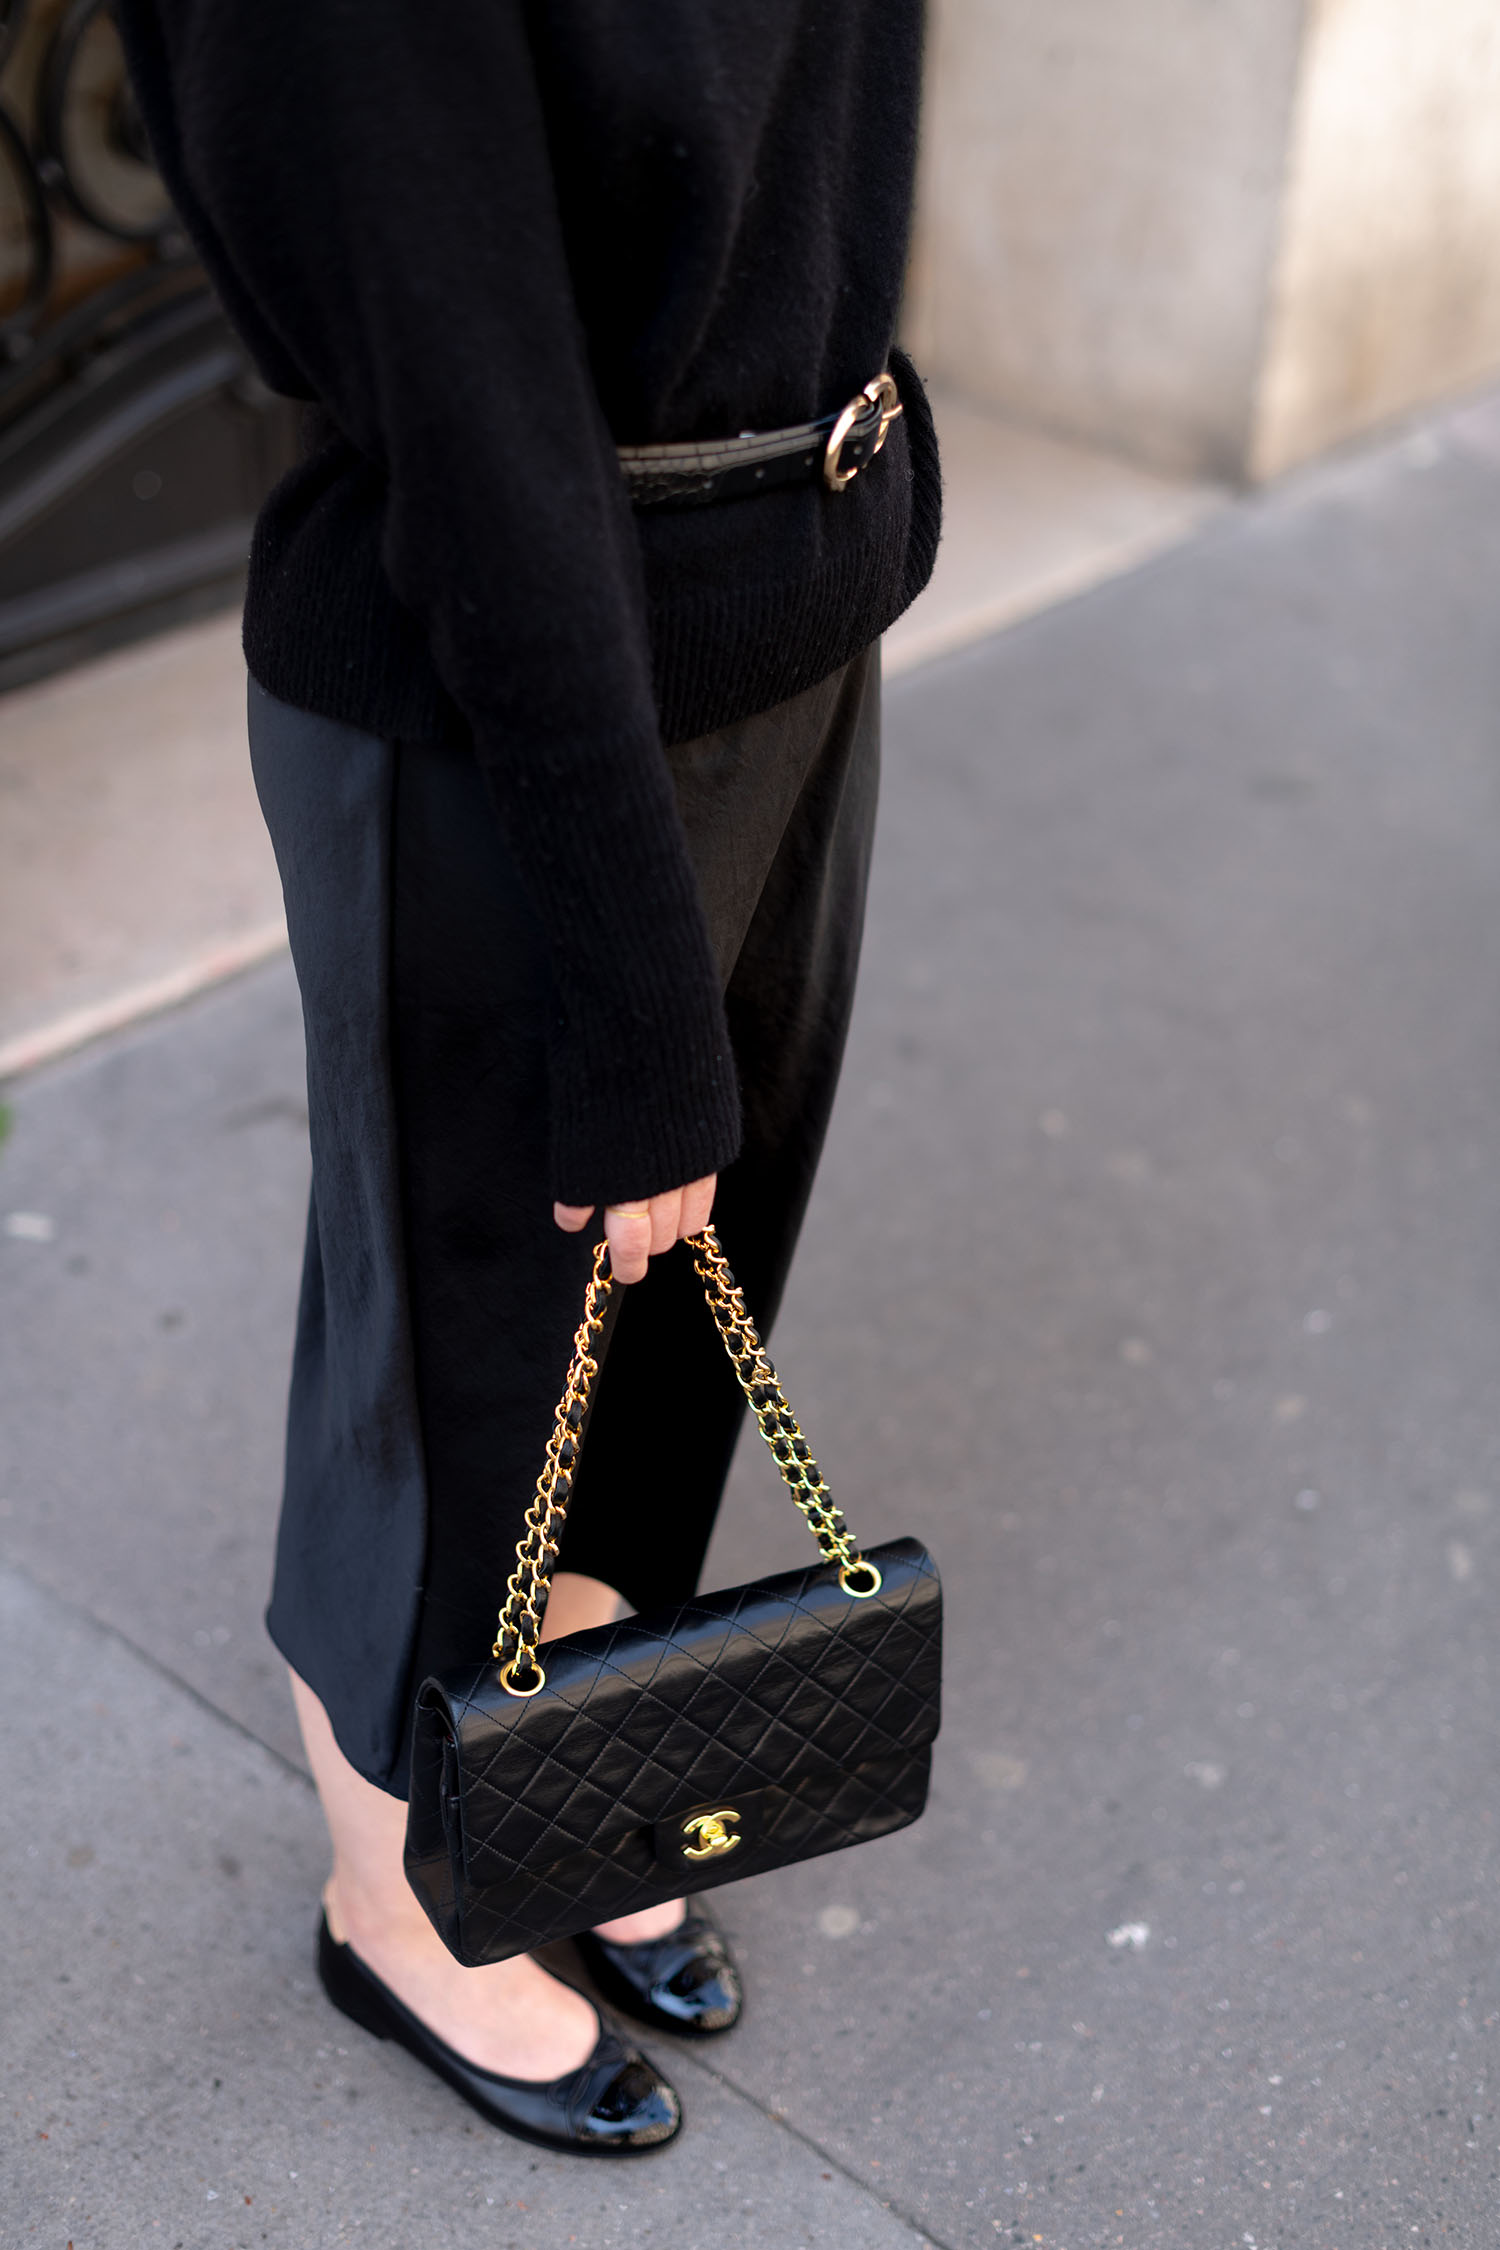 Coco & Voltaire - Chanel handbag, Mango belt, Chanel ballet flats